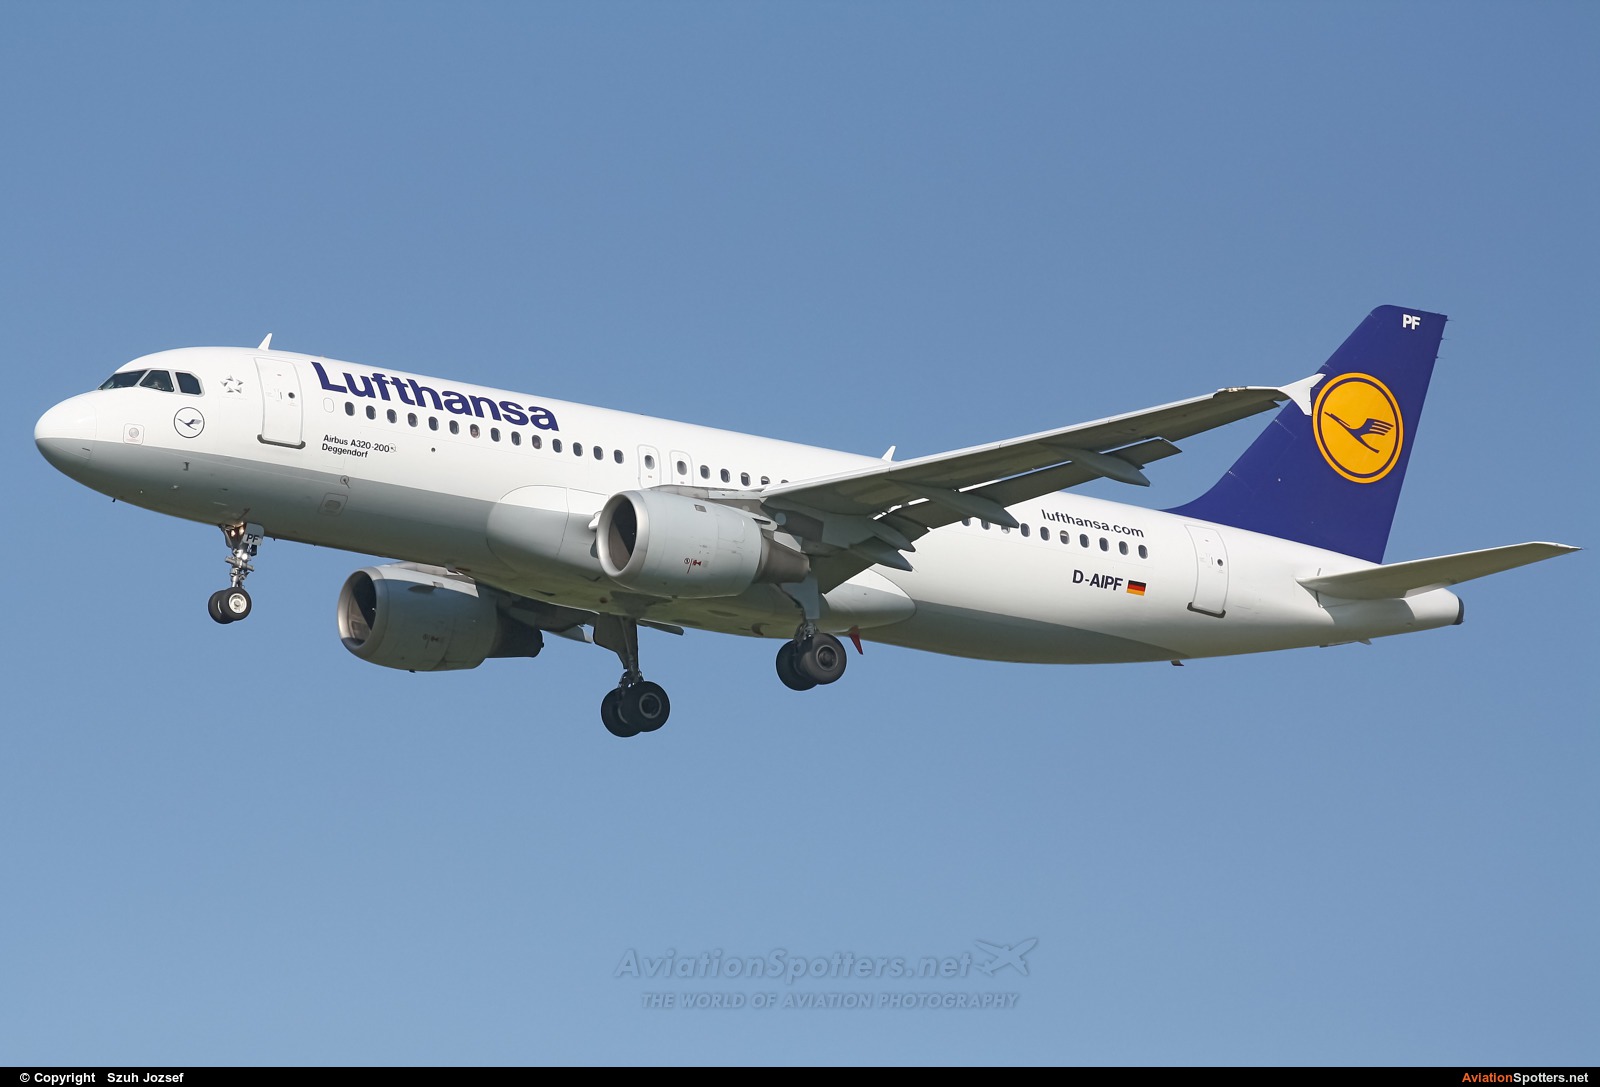 Lufthansa  -  A320  (D-AIPF) By Szuh Jozsef (szuh jozsef)